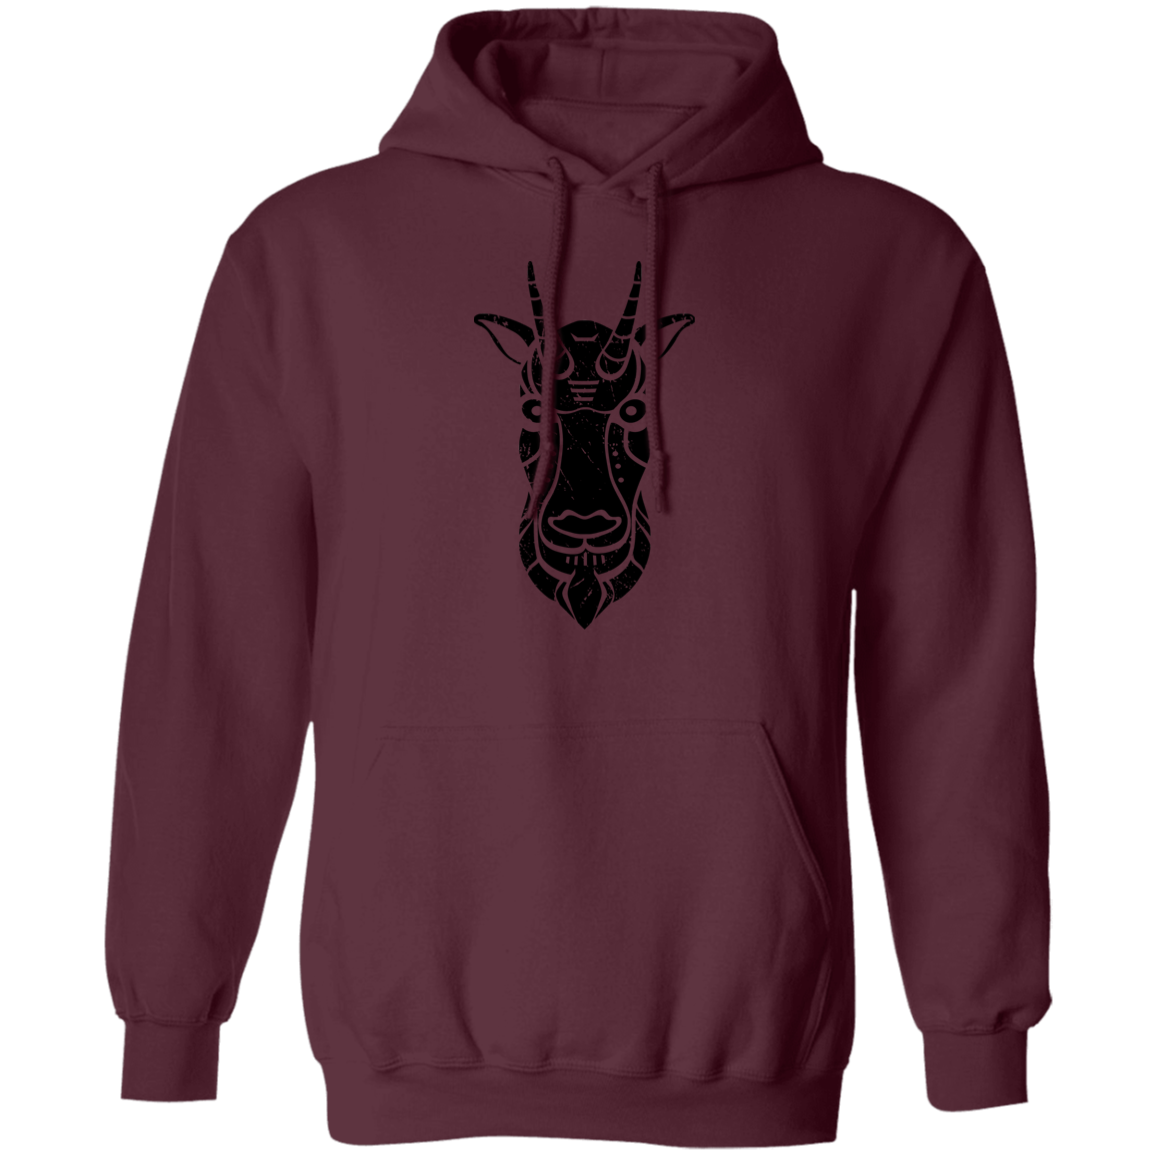 Black Distressed Emblem Hoodies for Adults (Mountain Goat/Rainier)